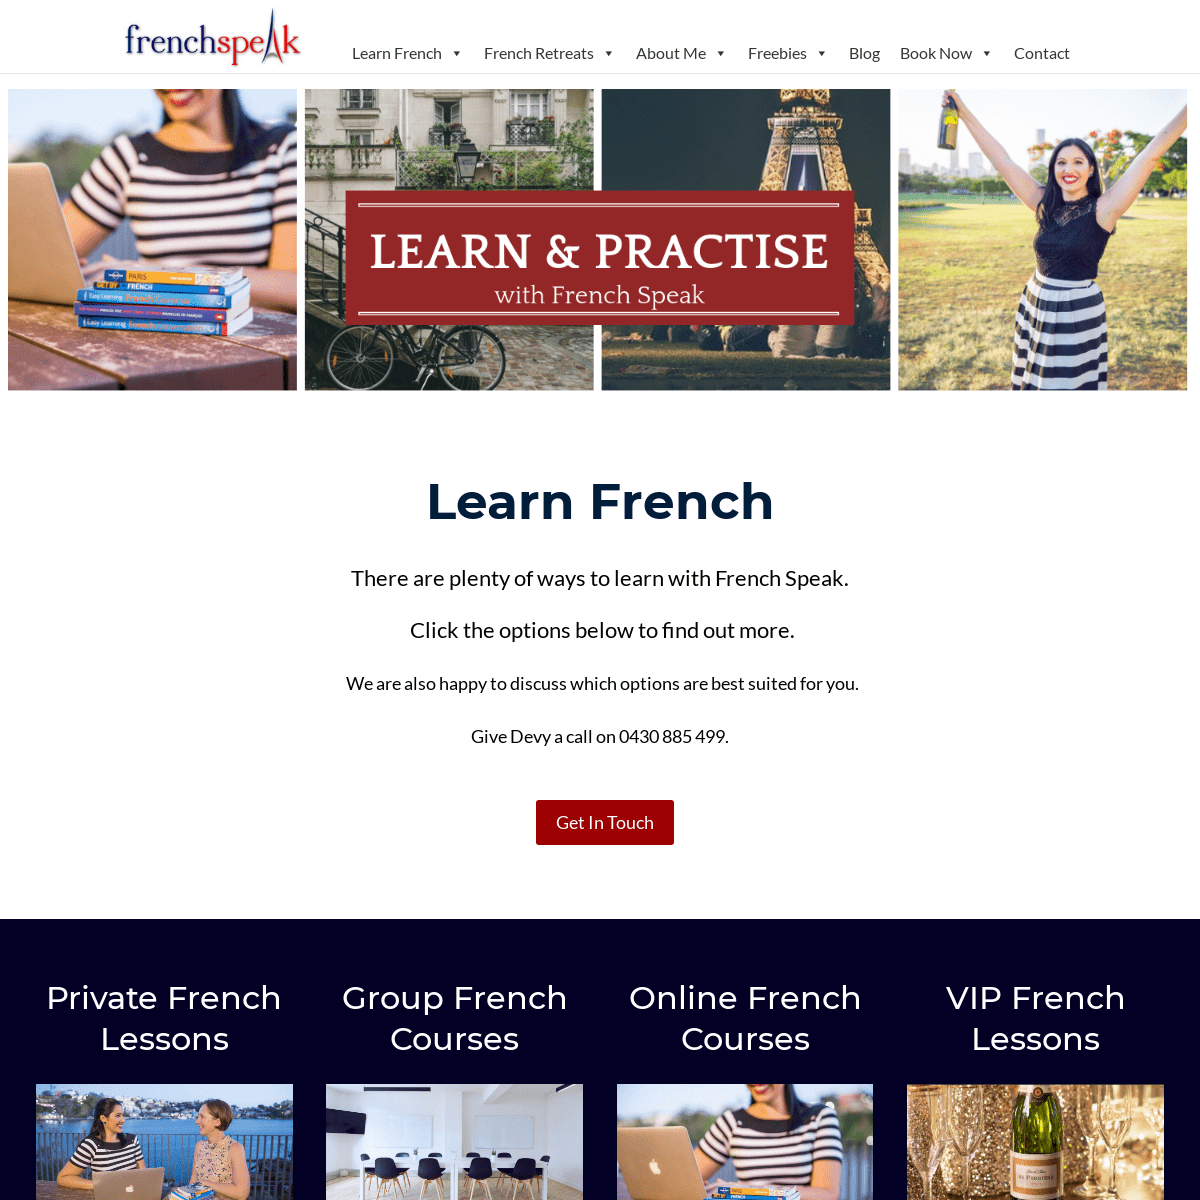 French Speak - Learn French in Brisbane with French Speak